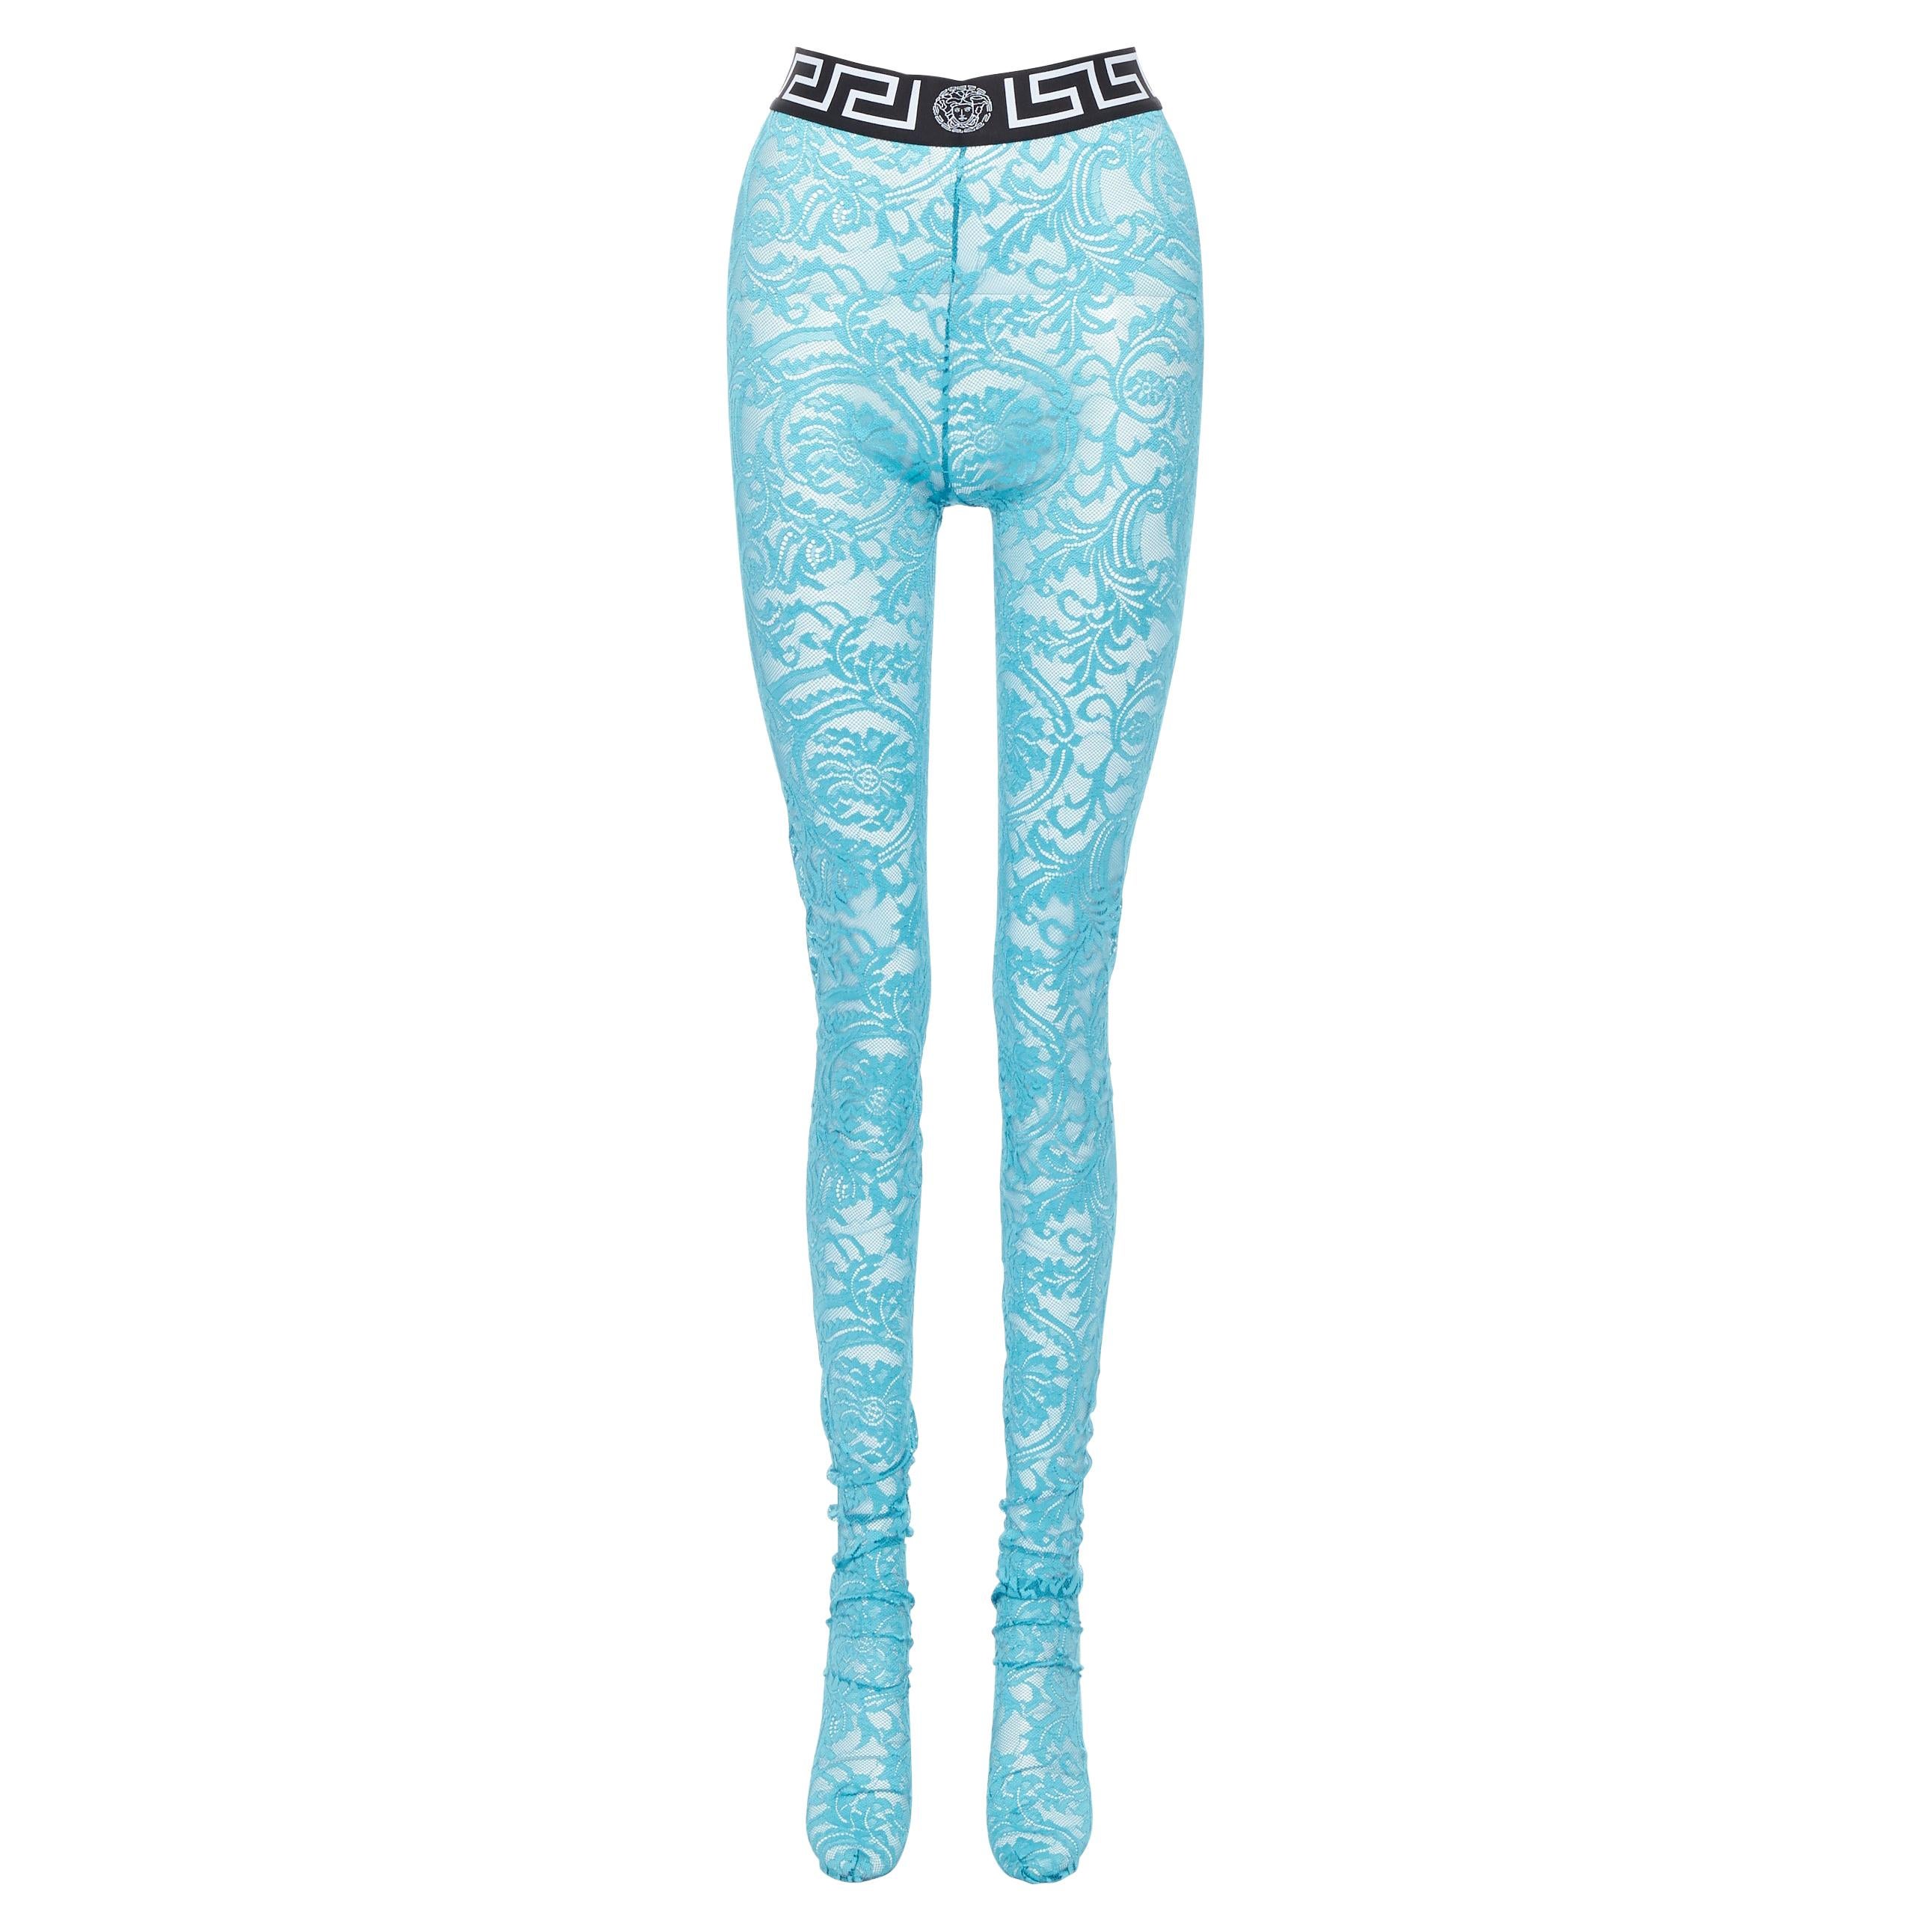 new VERSACE Underwear Medusa Greca waist band blue floral lace legging tights L